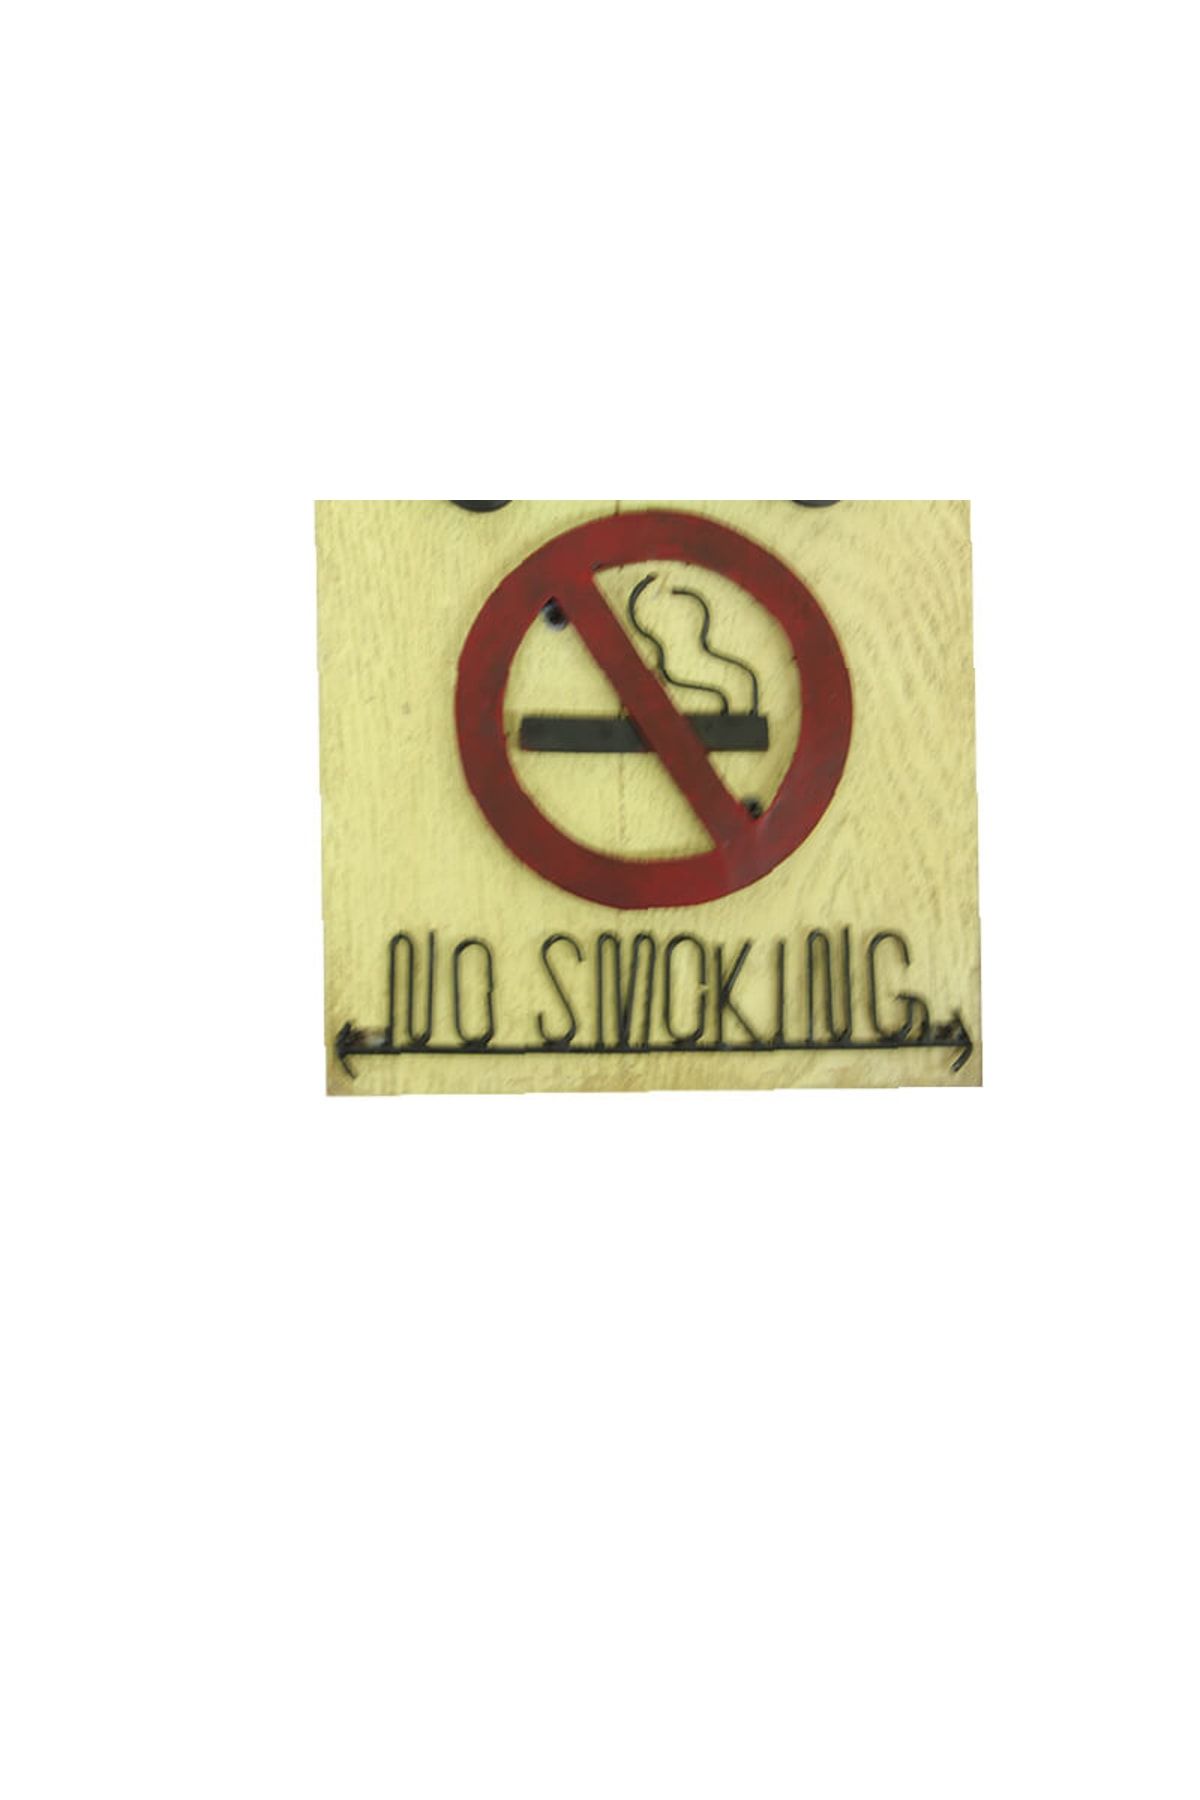 MNK Home Nostaljik Araba Figürlü Ahşap Kapı Yazısı No Smoking 24cm